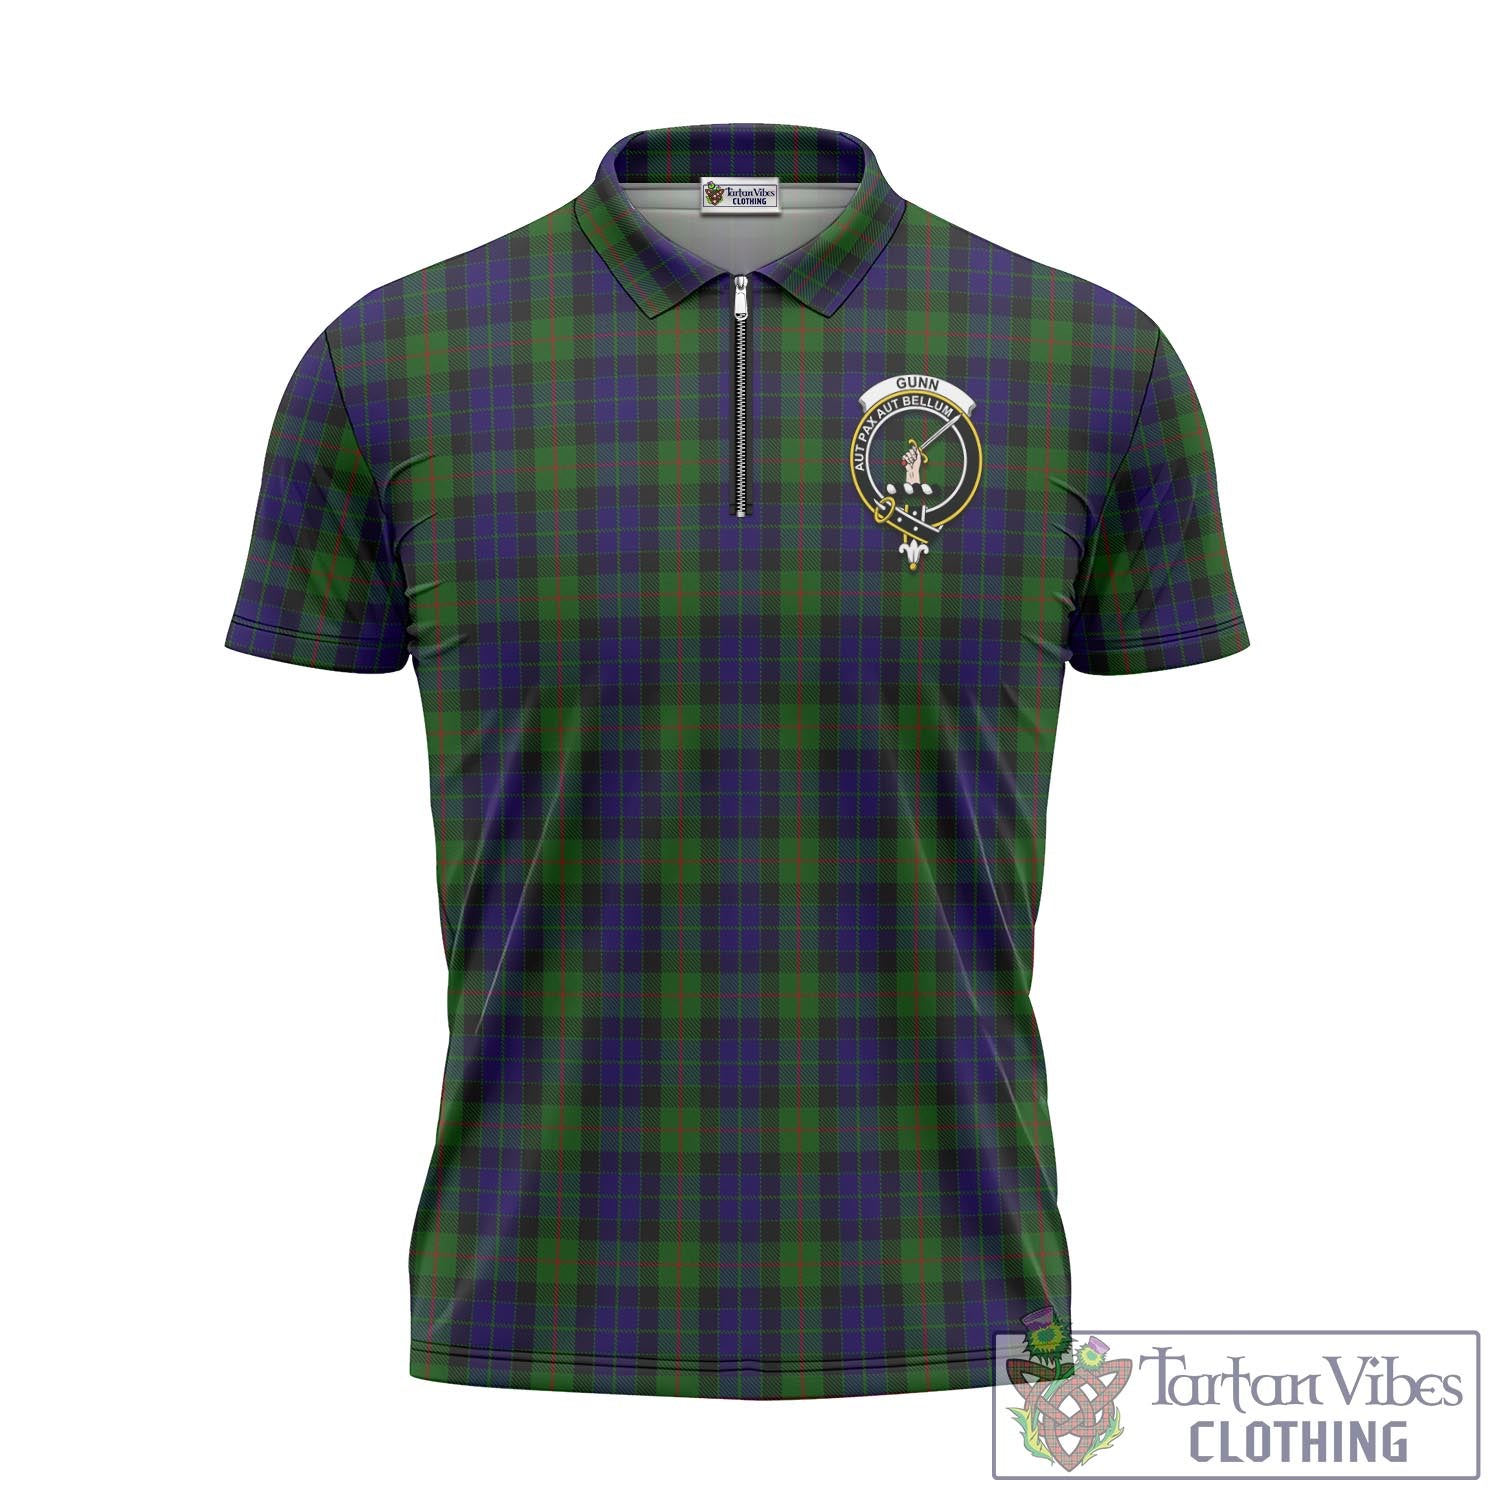 Tartan Vibes Clothing Gunn Tartan Zipper Polo Shirt with Family Crest